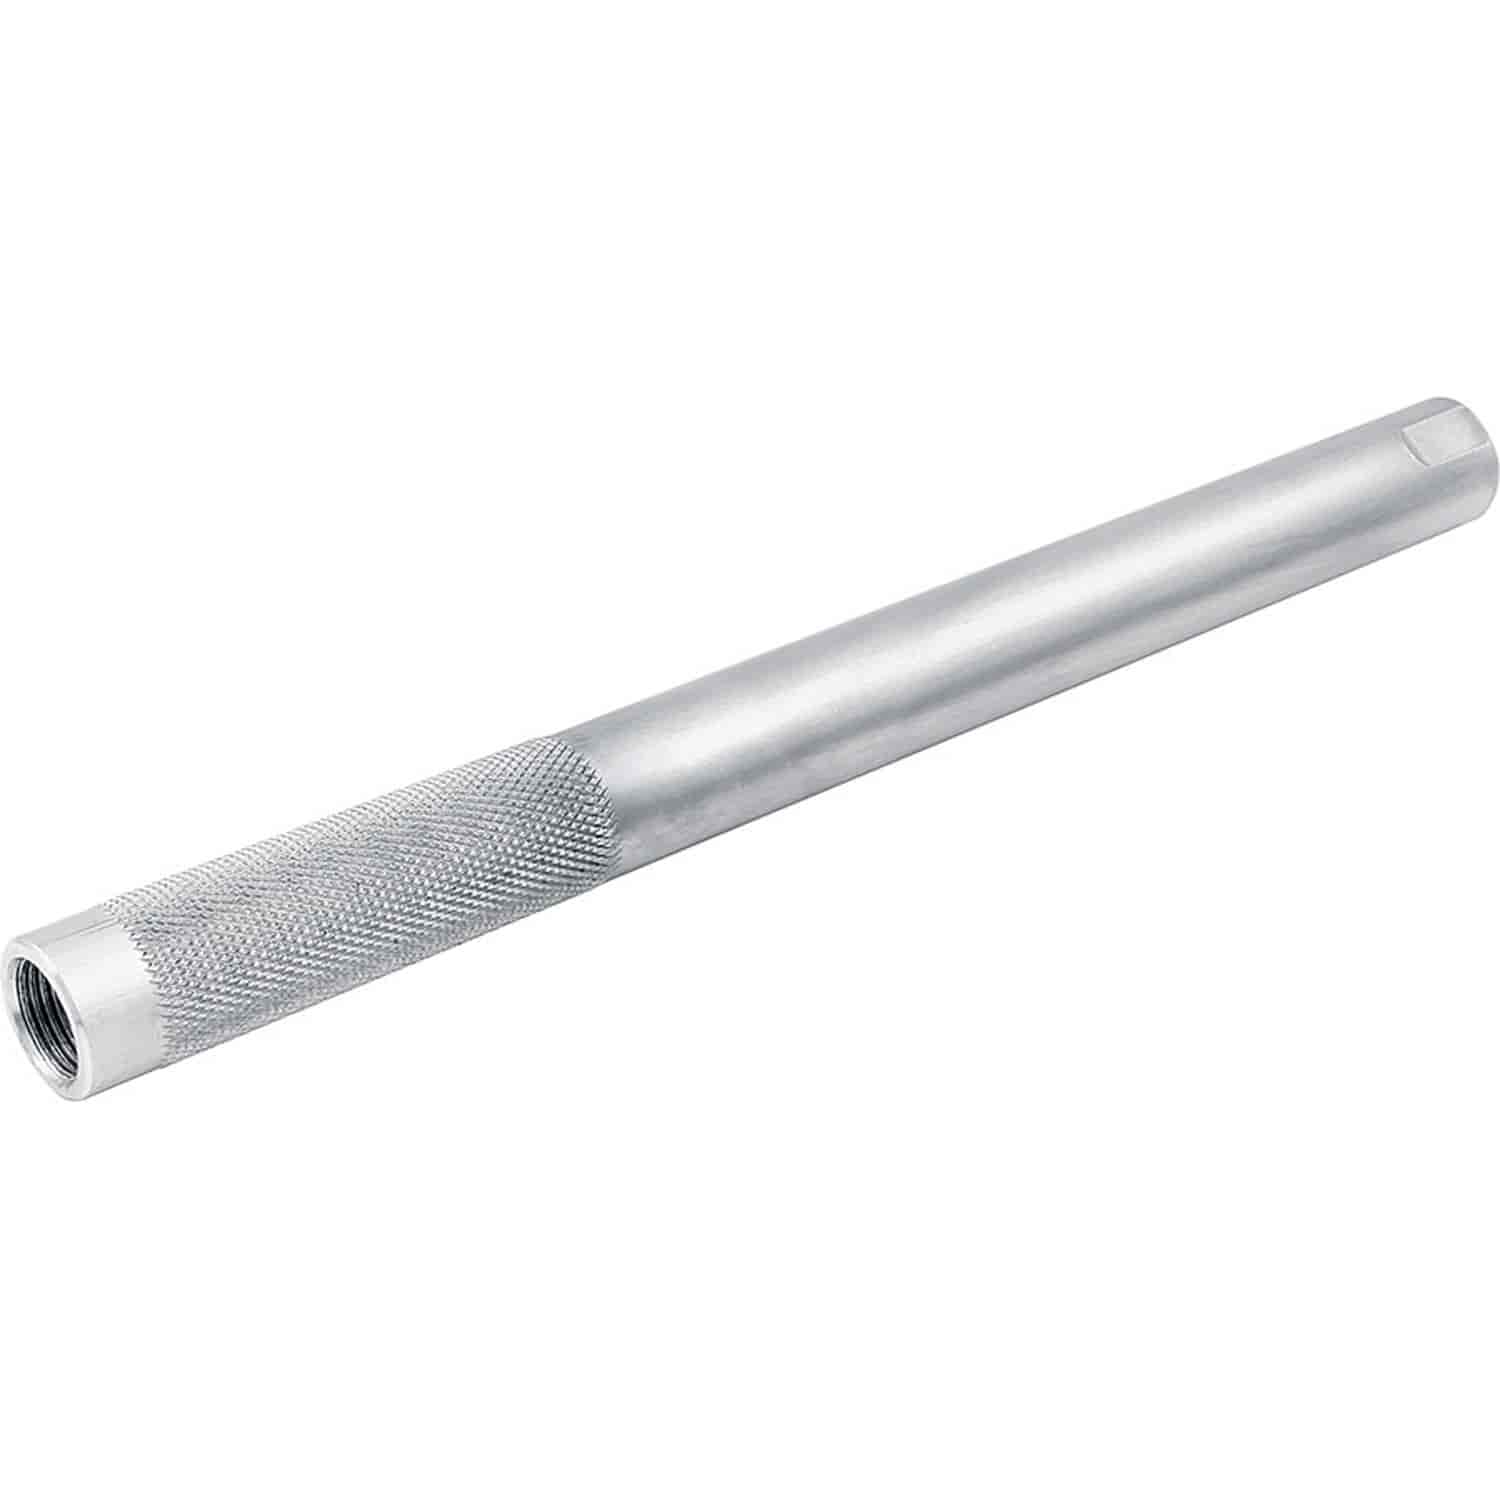 Swedged Aluminum Tie Rod Tube Length: 7"